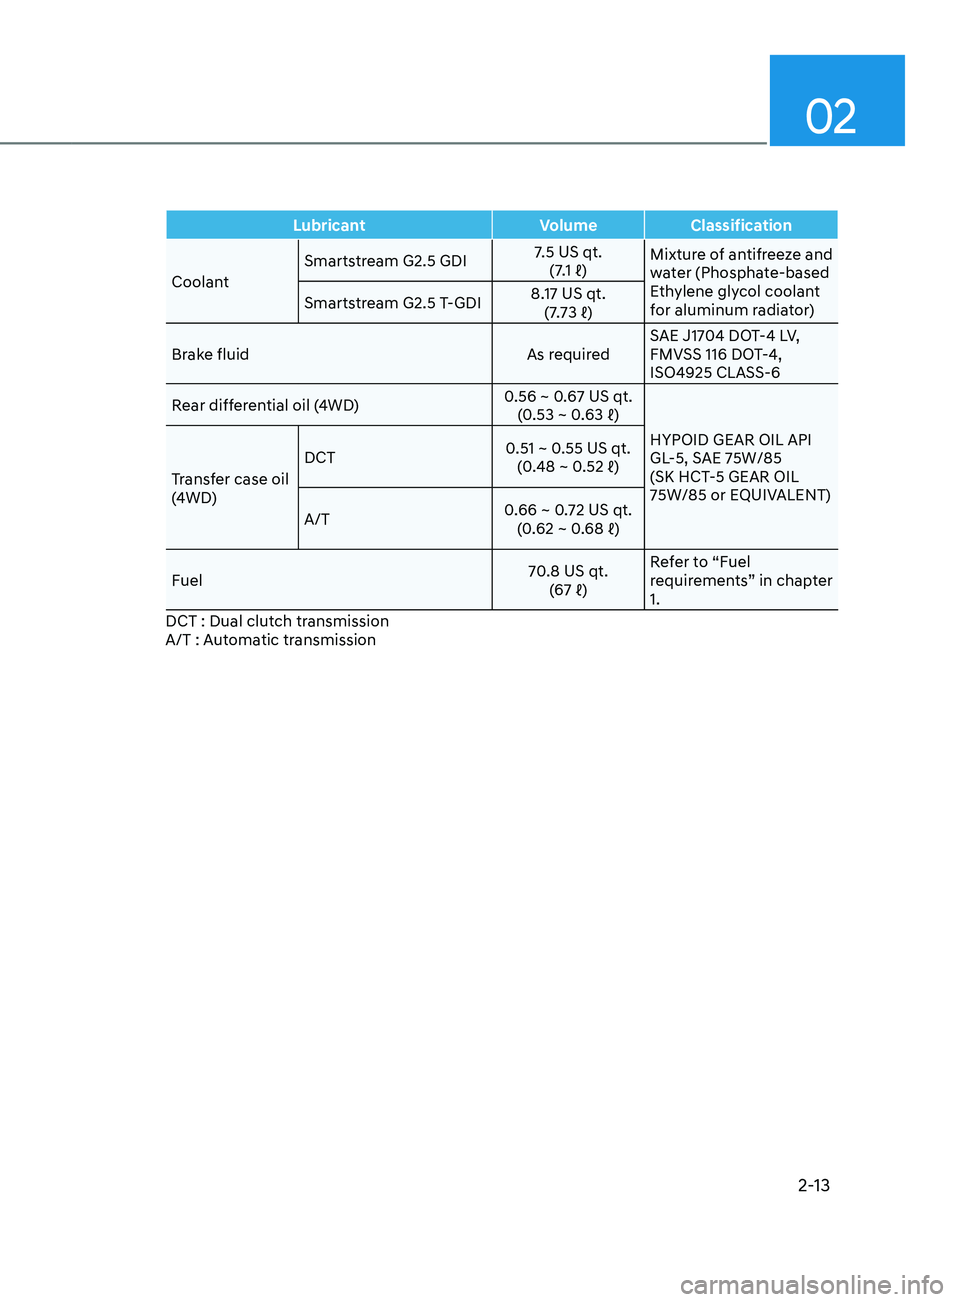 HYUNDAI SANTA FE 2021  Owners Manual 02
2-13
LubricantVolumeClassification
Coolant Smartstream G2.5 GDI
7.5 US qt.
(7.1
	ℓ) Mixtur

e of antifreeze and 
water (Phosphate-based 
Ethylene glycol coolant 
for aluminum radiator)
Smartstrea